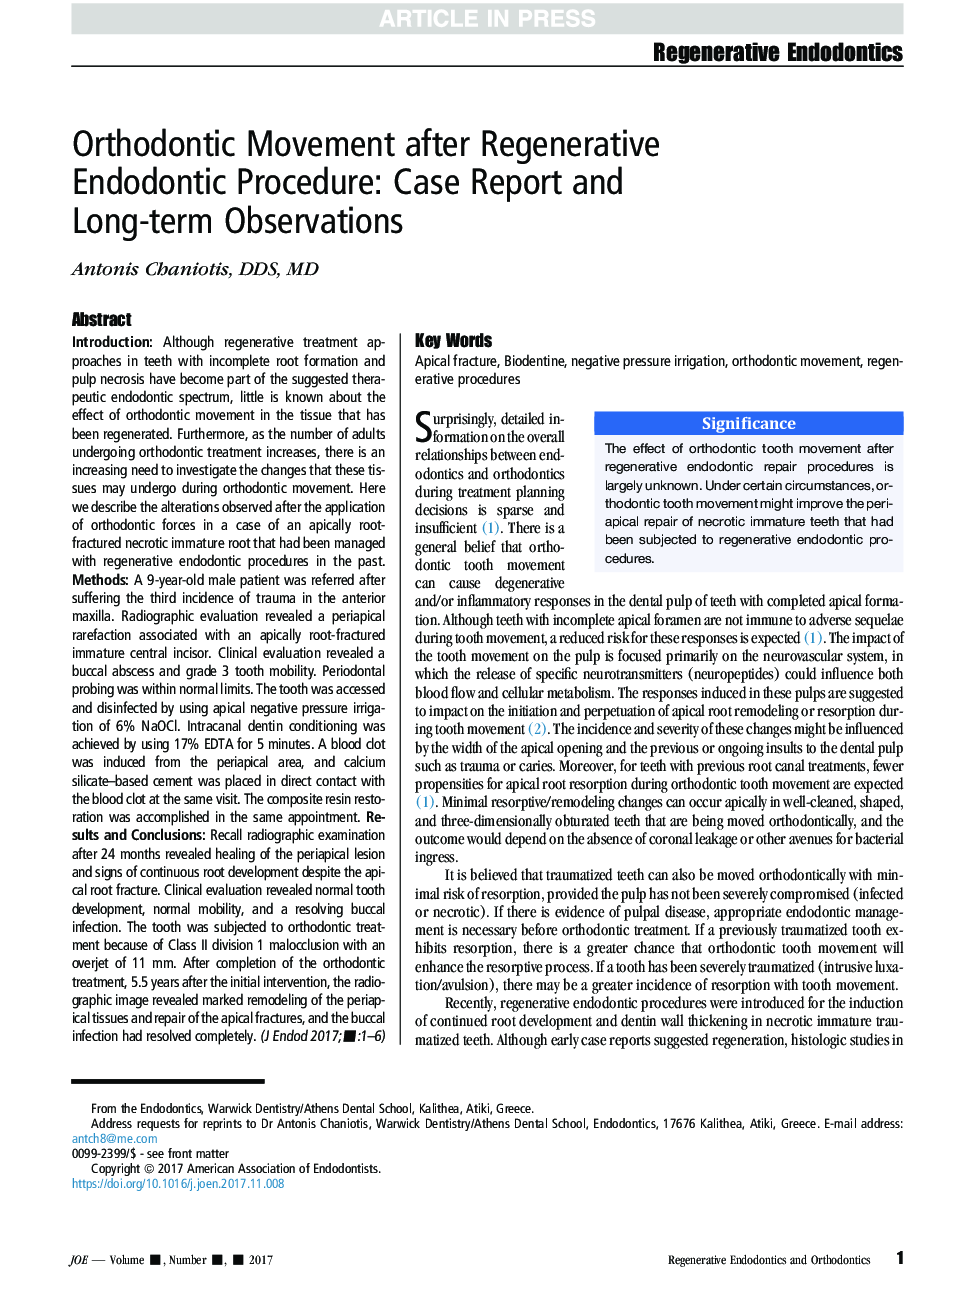 Orthodontic Movement after Regenerative Endodontic Procedure: Case Report and Long-term Observations